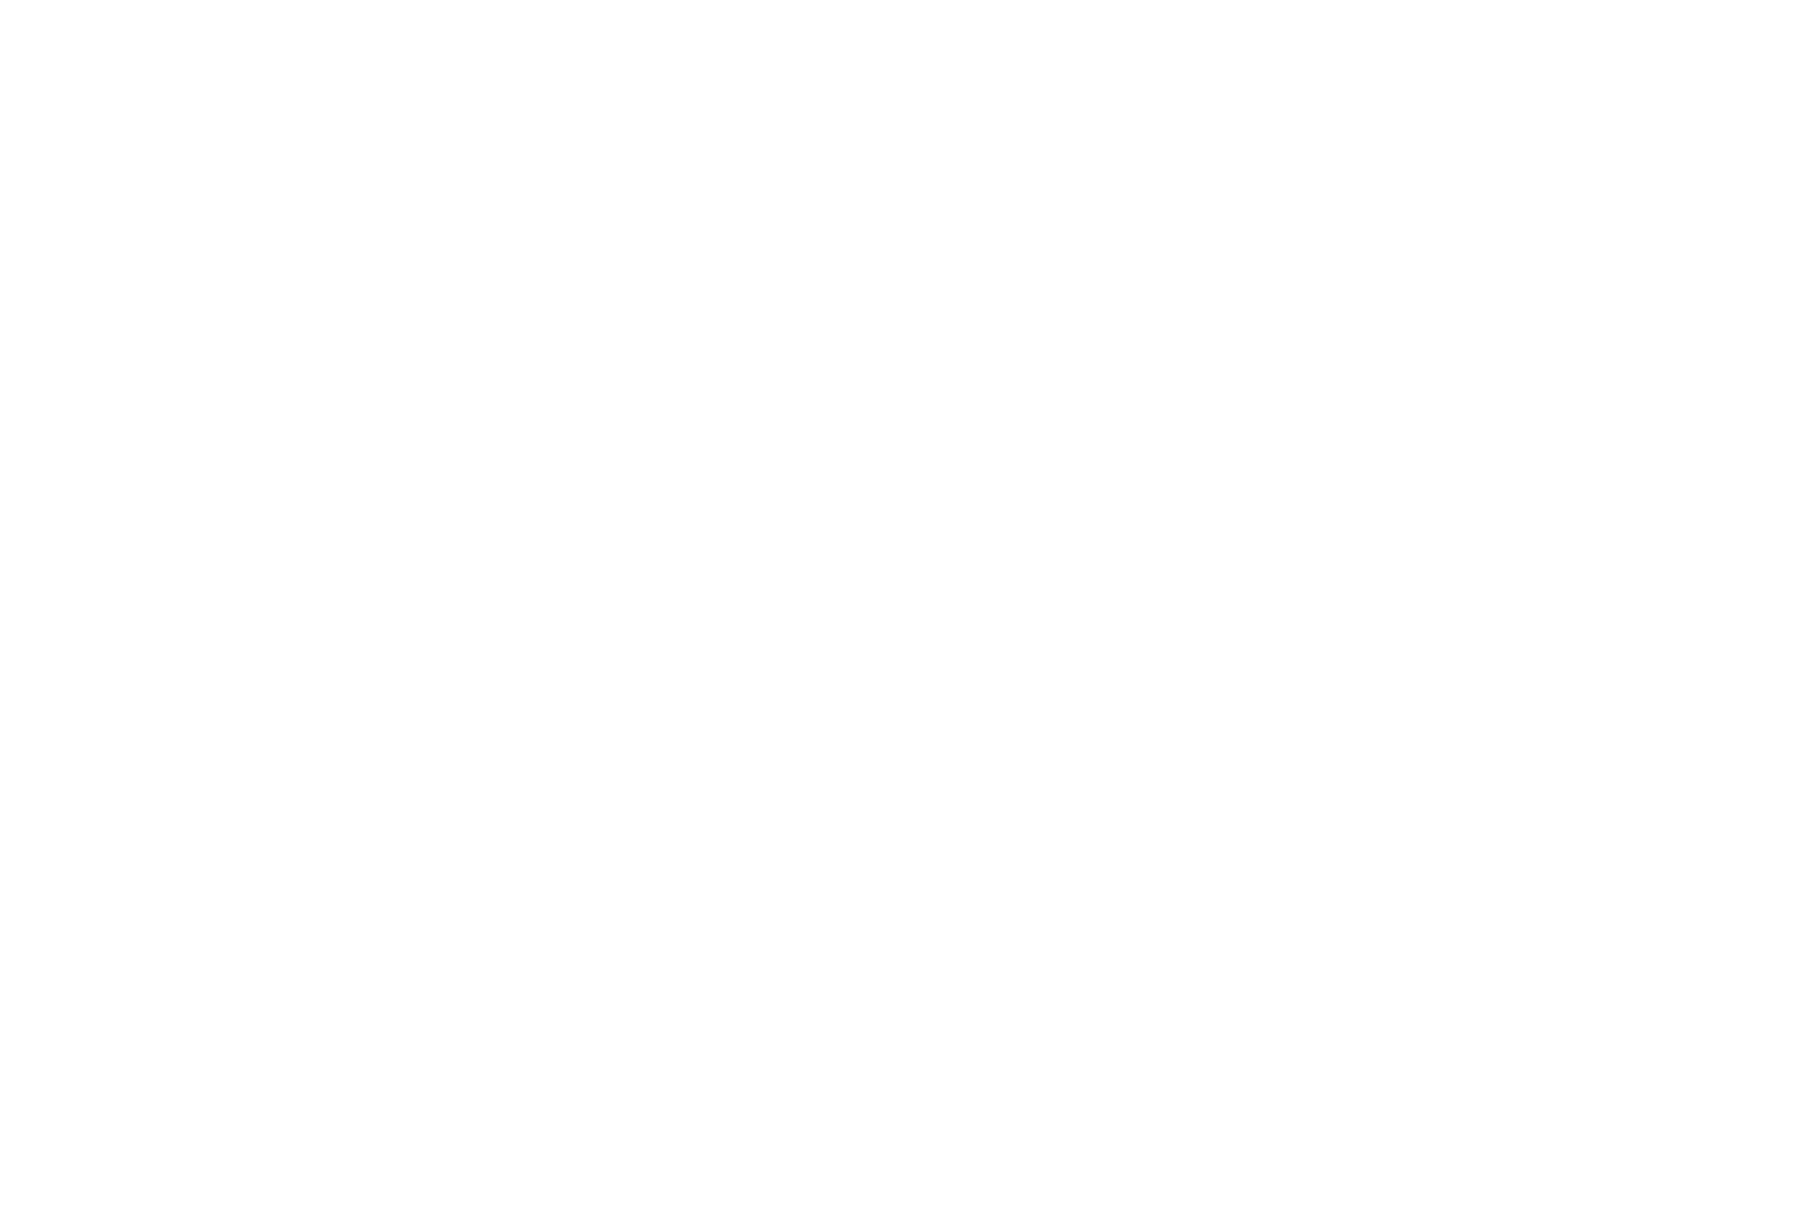 Benjamin padernoz technical artist logo